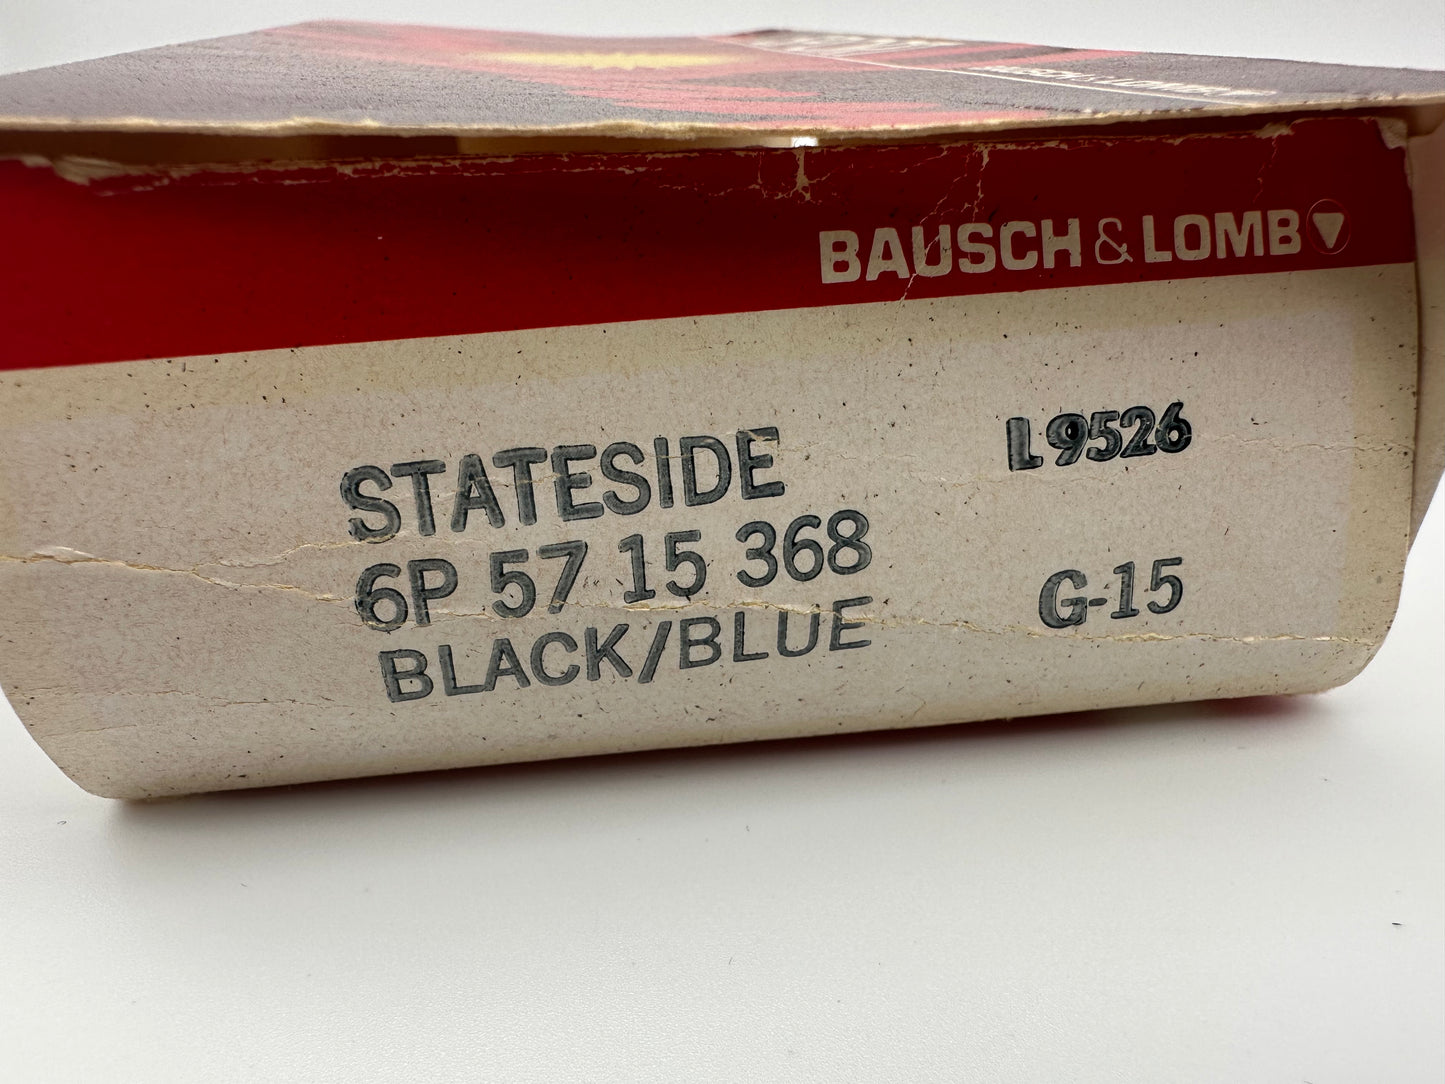 Vintage Ray Ban Stateside Black/Blue G15 Bausch & Lomb